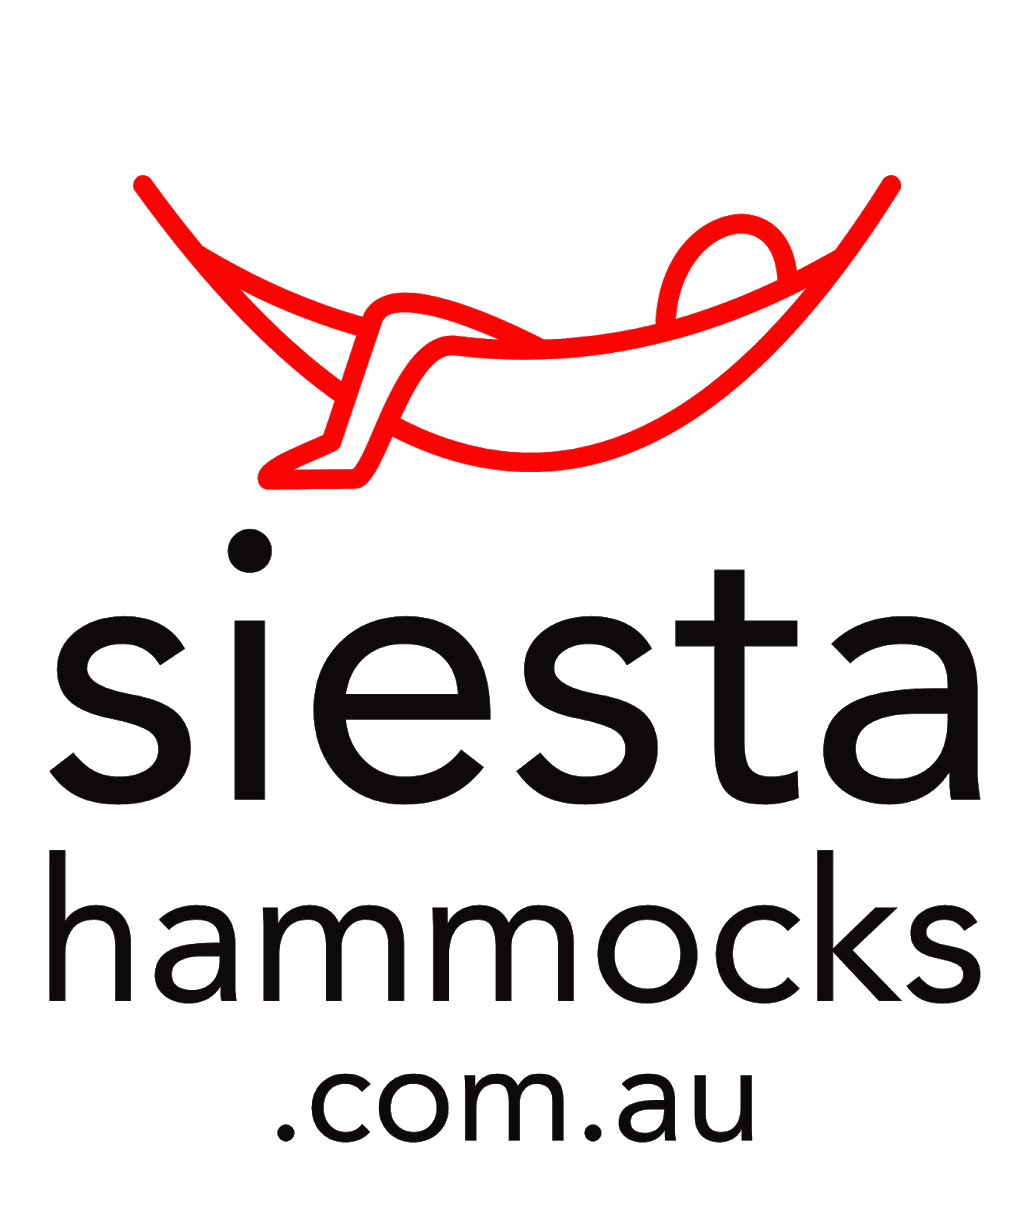 Siesta Hammocks - Hammock Chairs & Stands | furniture store | 190/360 Kingsway, Caringbah NSW 2229, Australia | 0280911204 OR +61 2 8091 1204